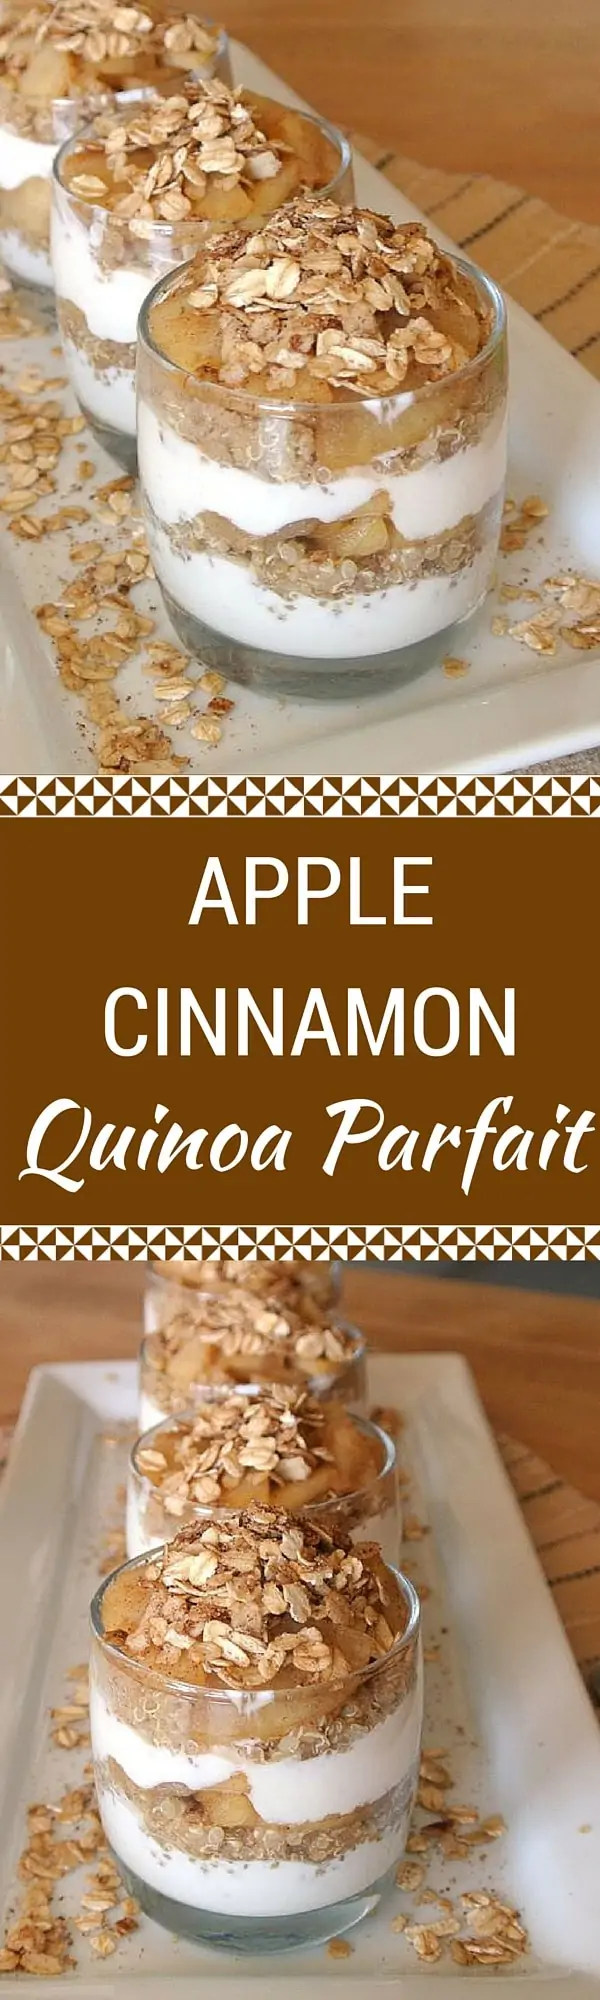 Apple Cinnamon Quinoa Parfait